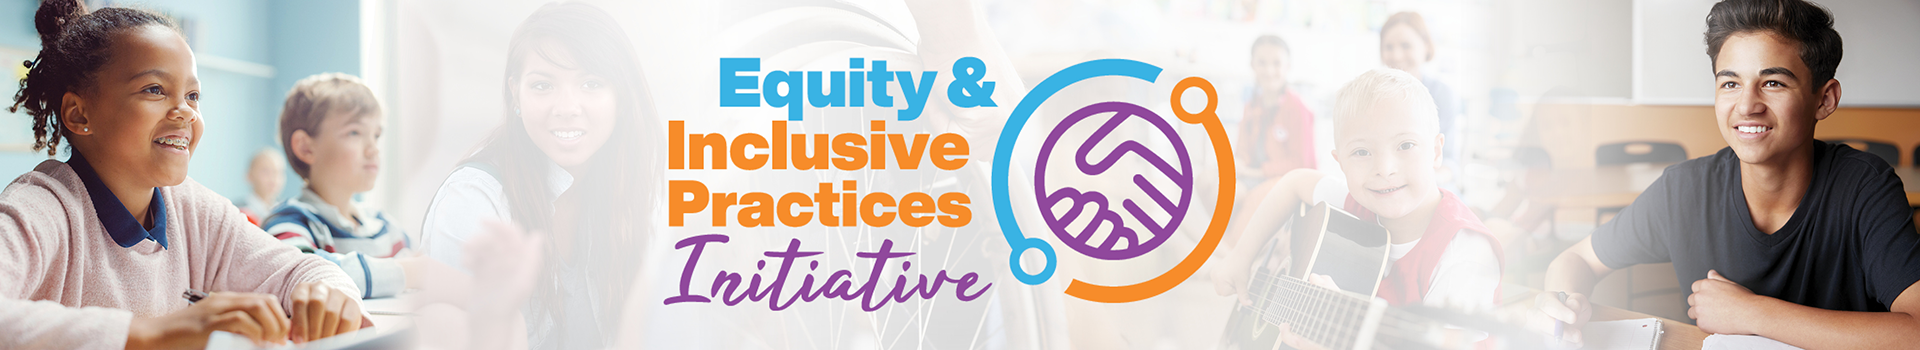 Equity & Inclusive Practices Initiative